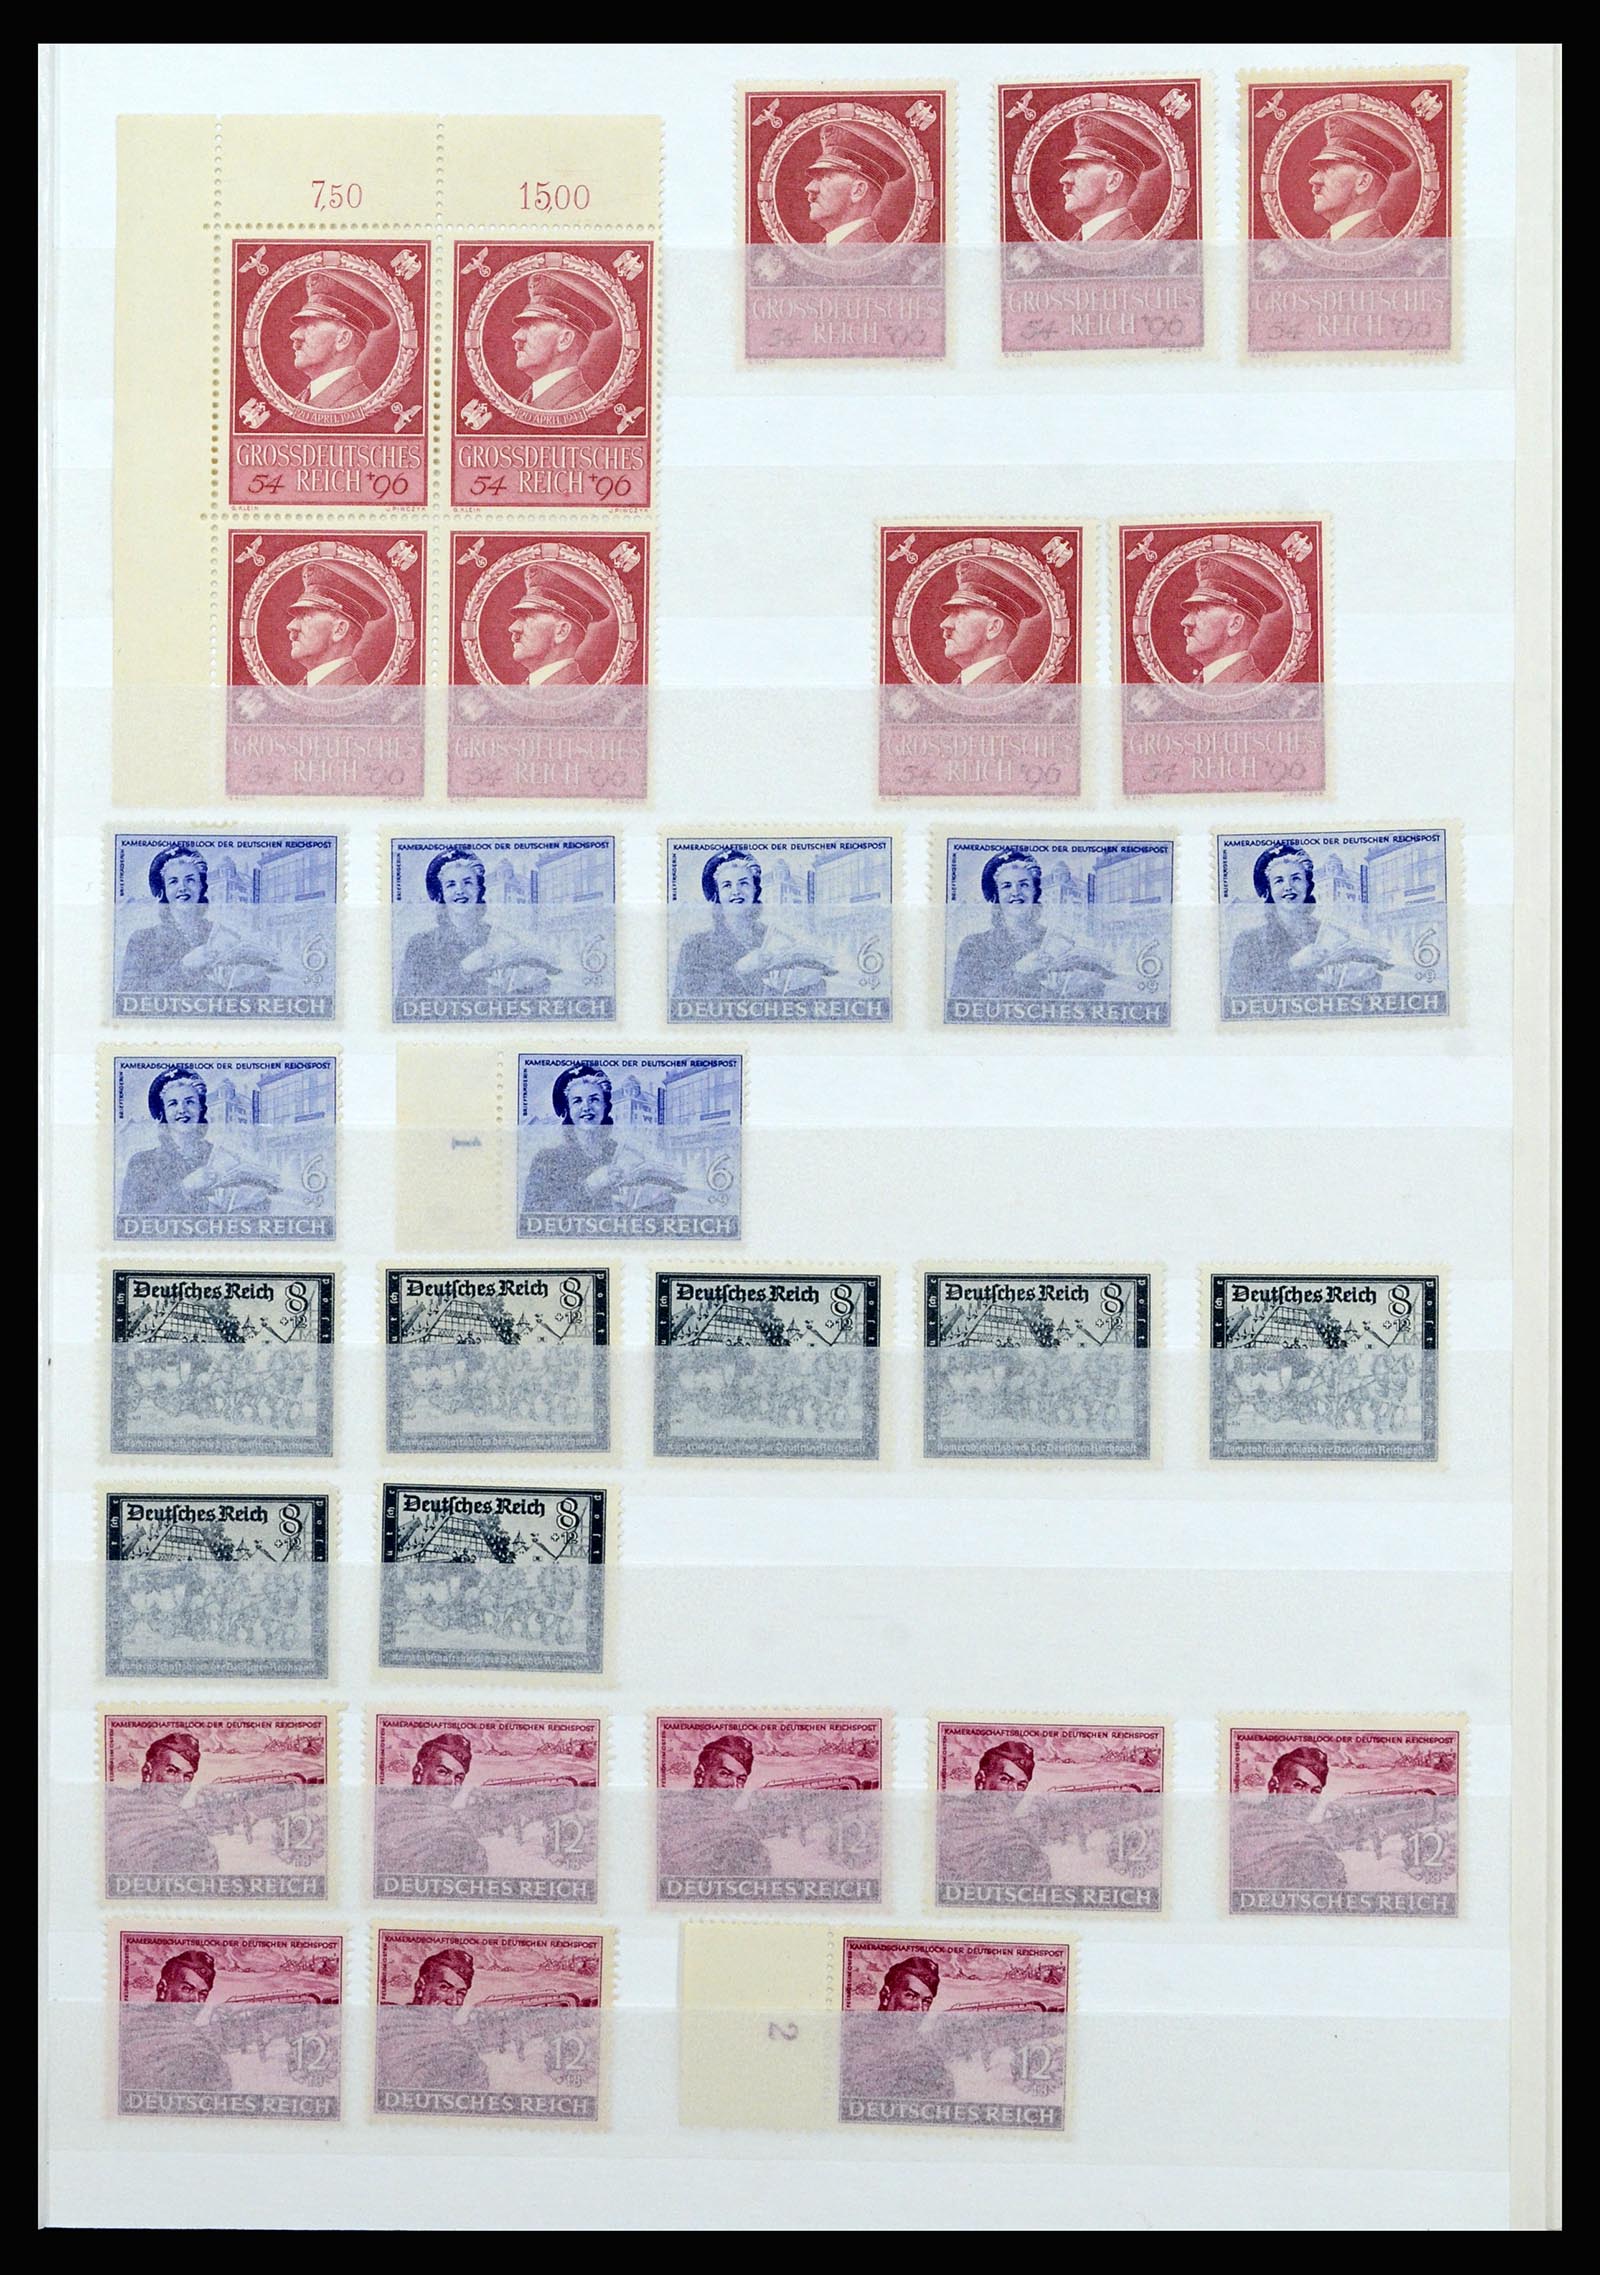 37103 037 - Stamp collection 37103 German Reich 1880-1945.